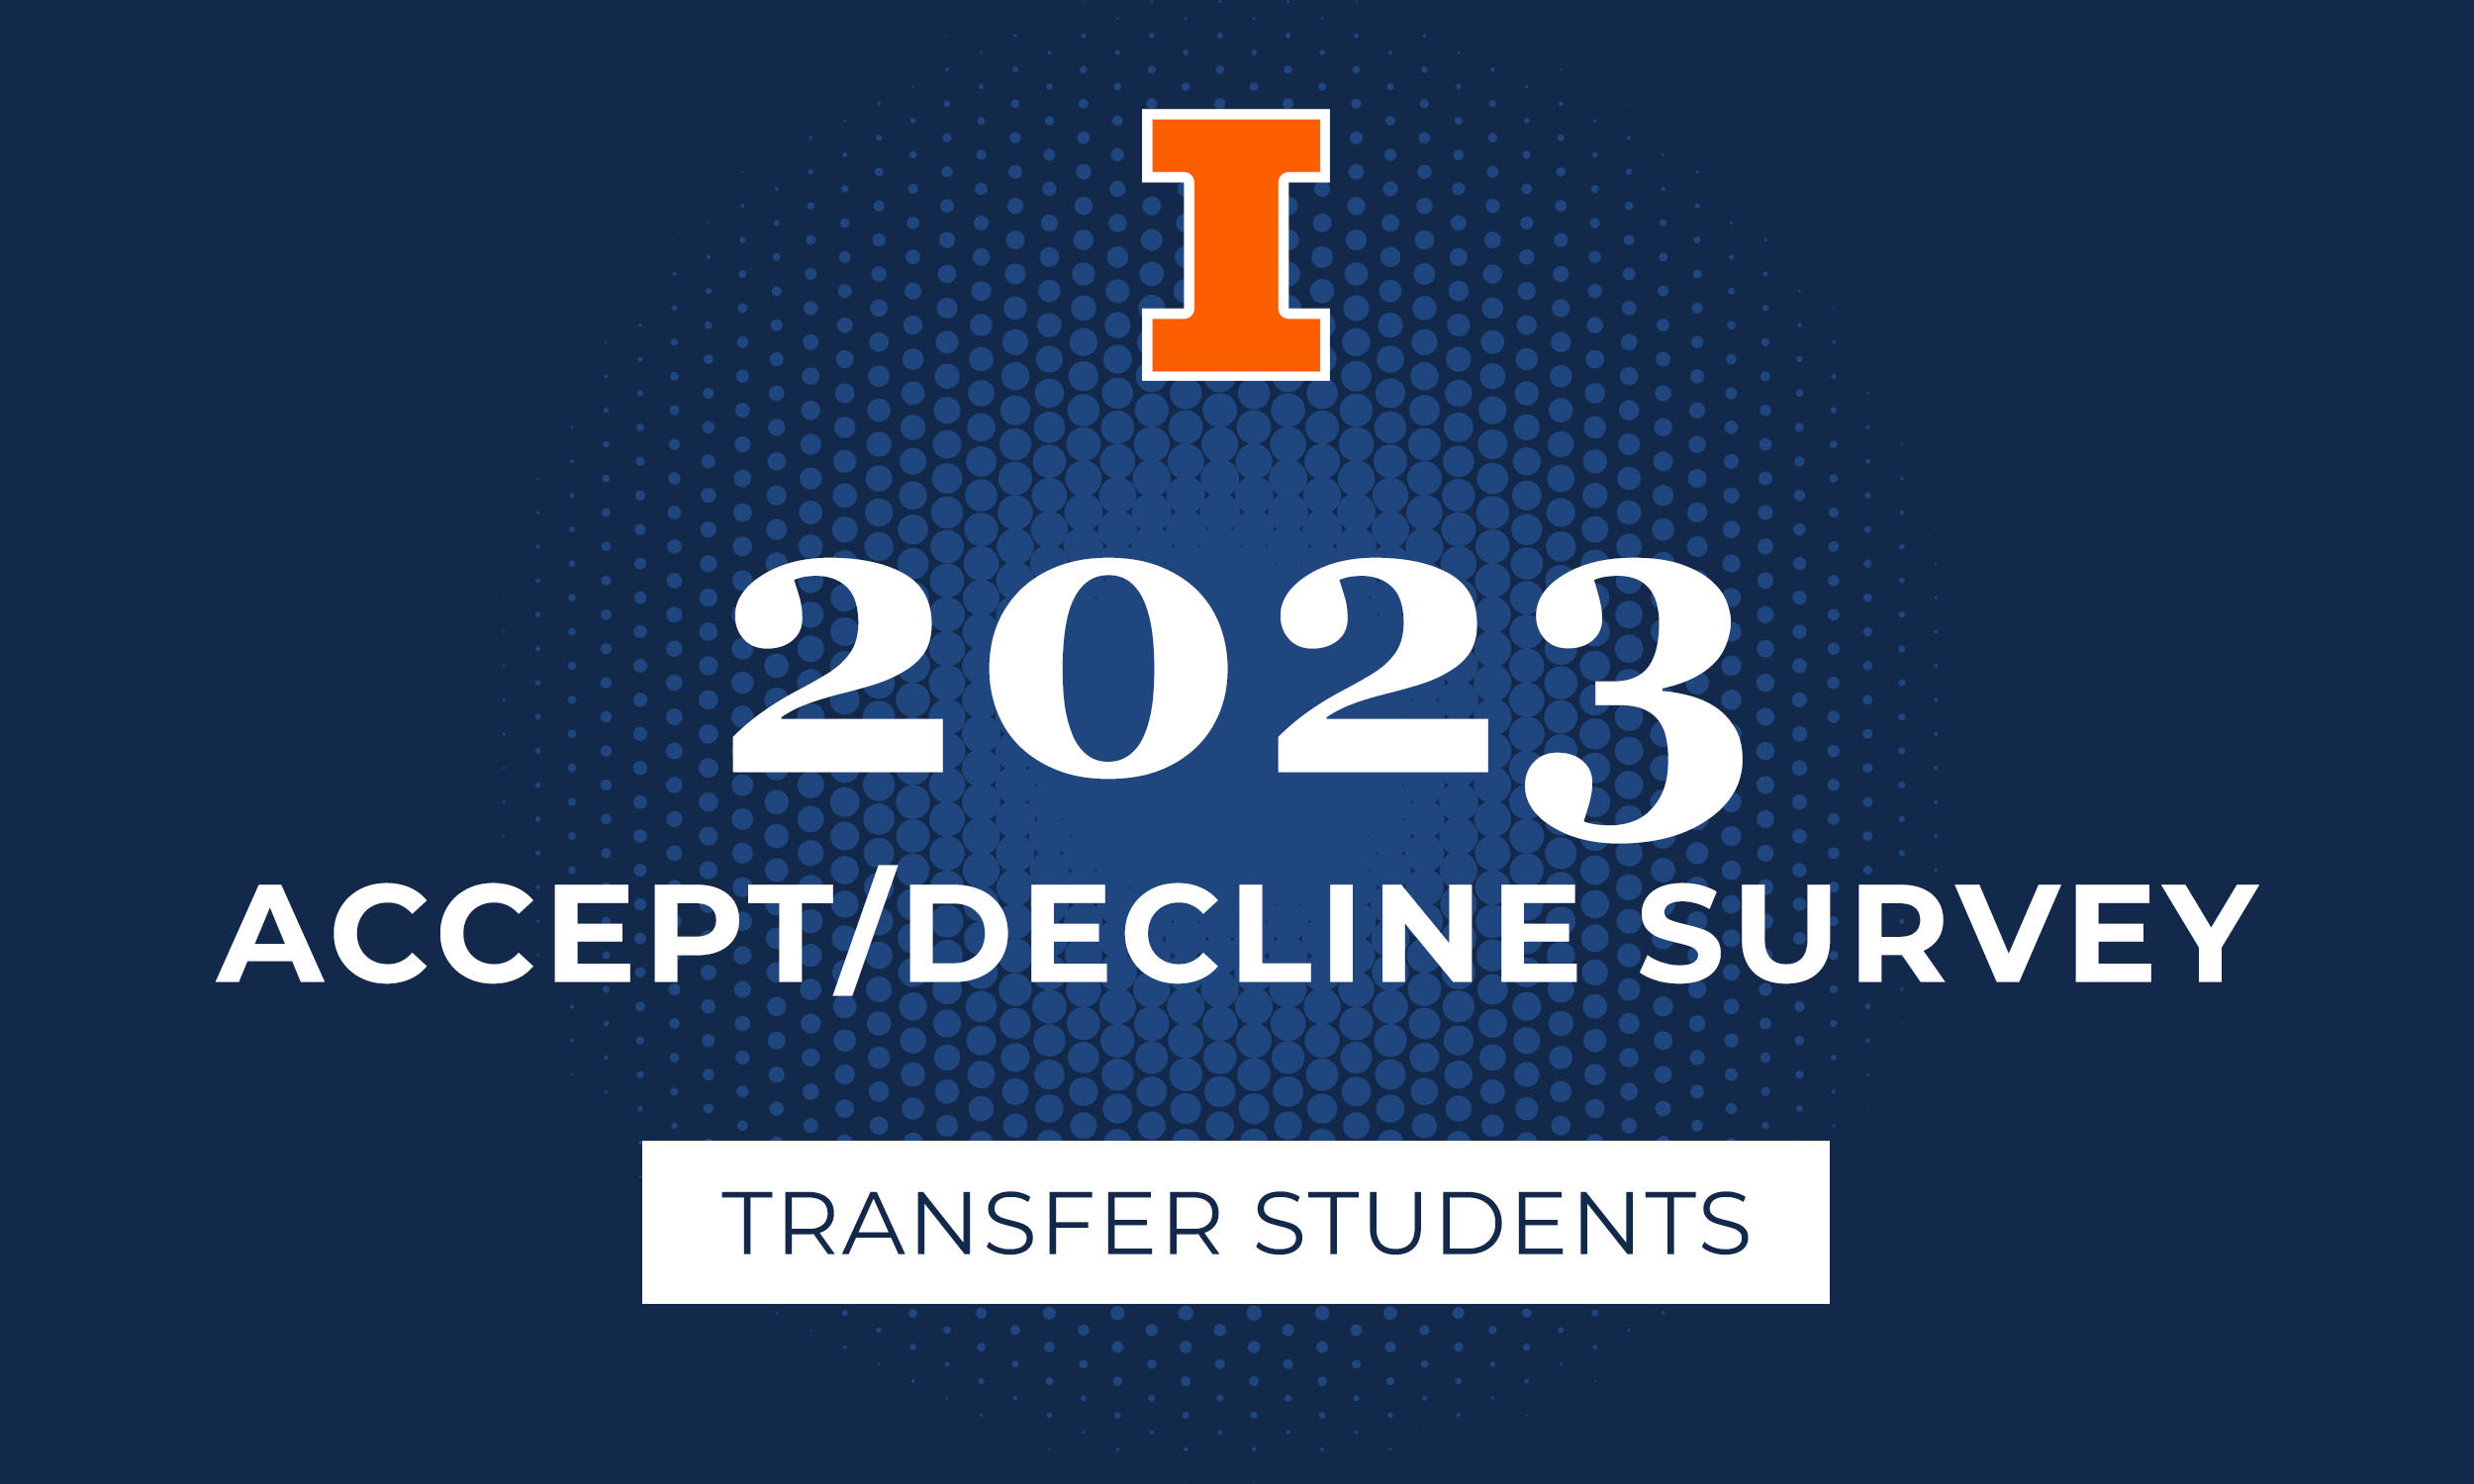 2022 First-Year Accept/Decline Survey